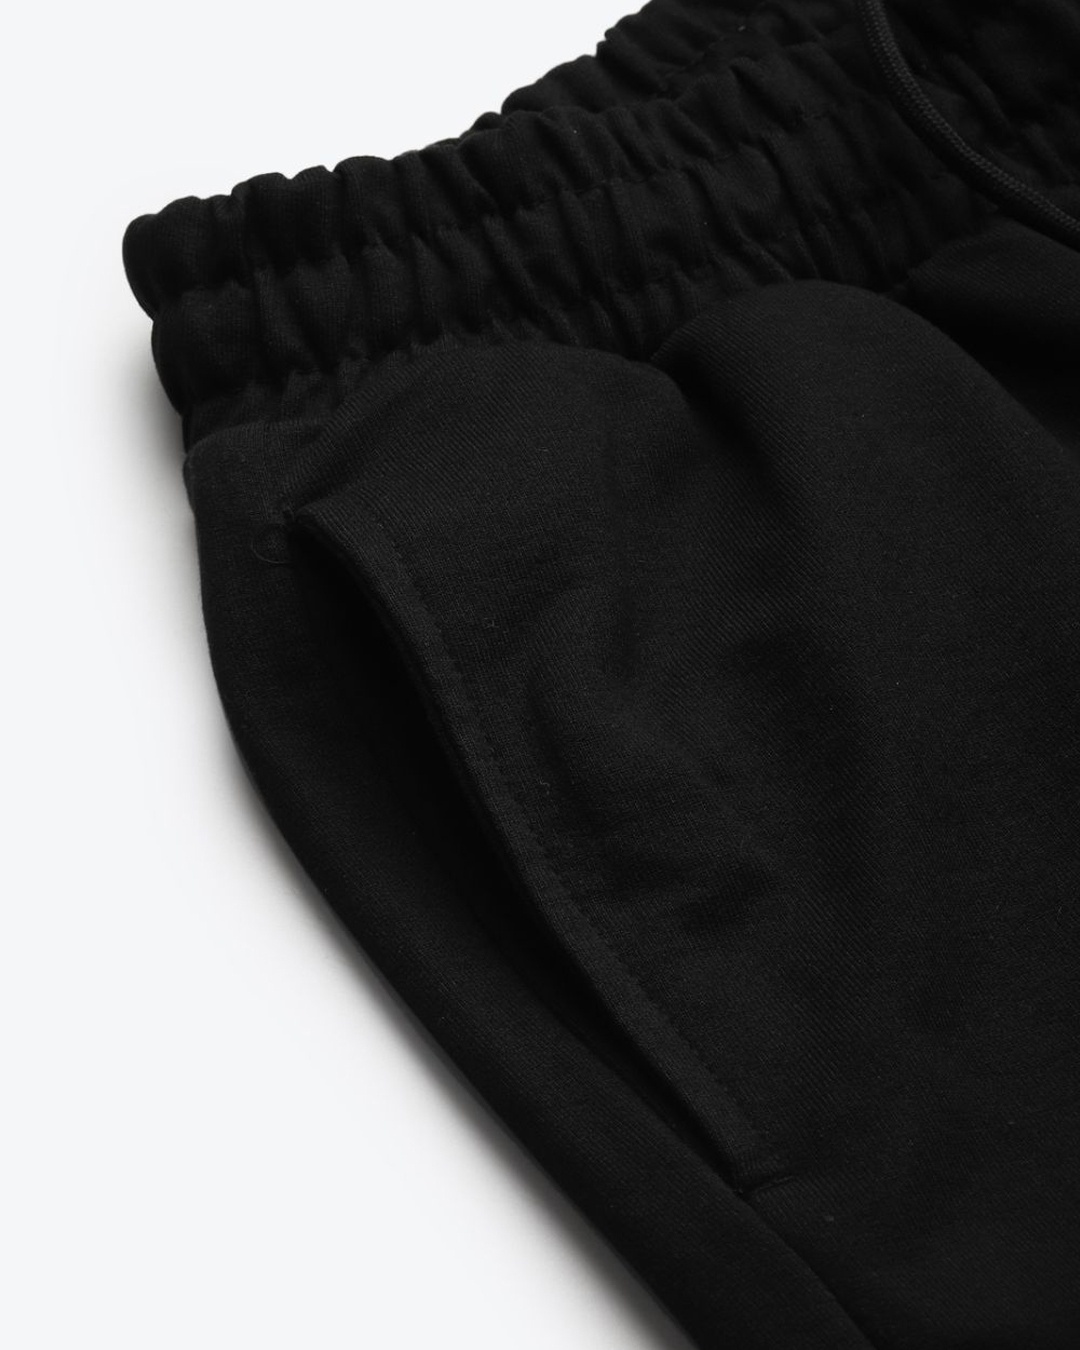 Shop Women Black Solid Track Pants